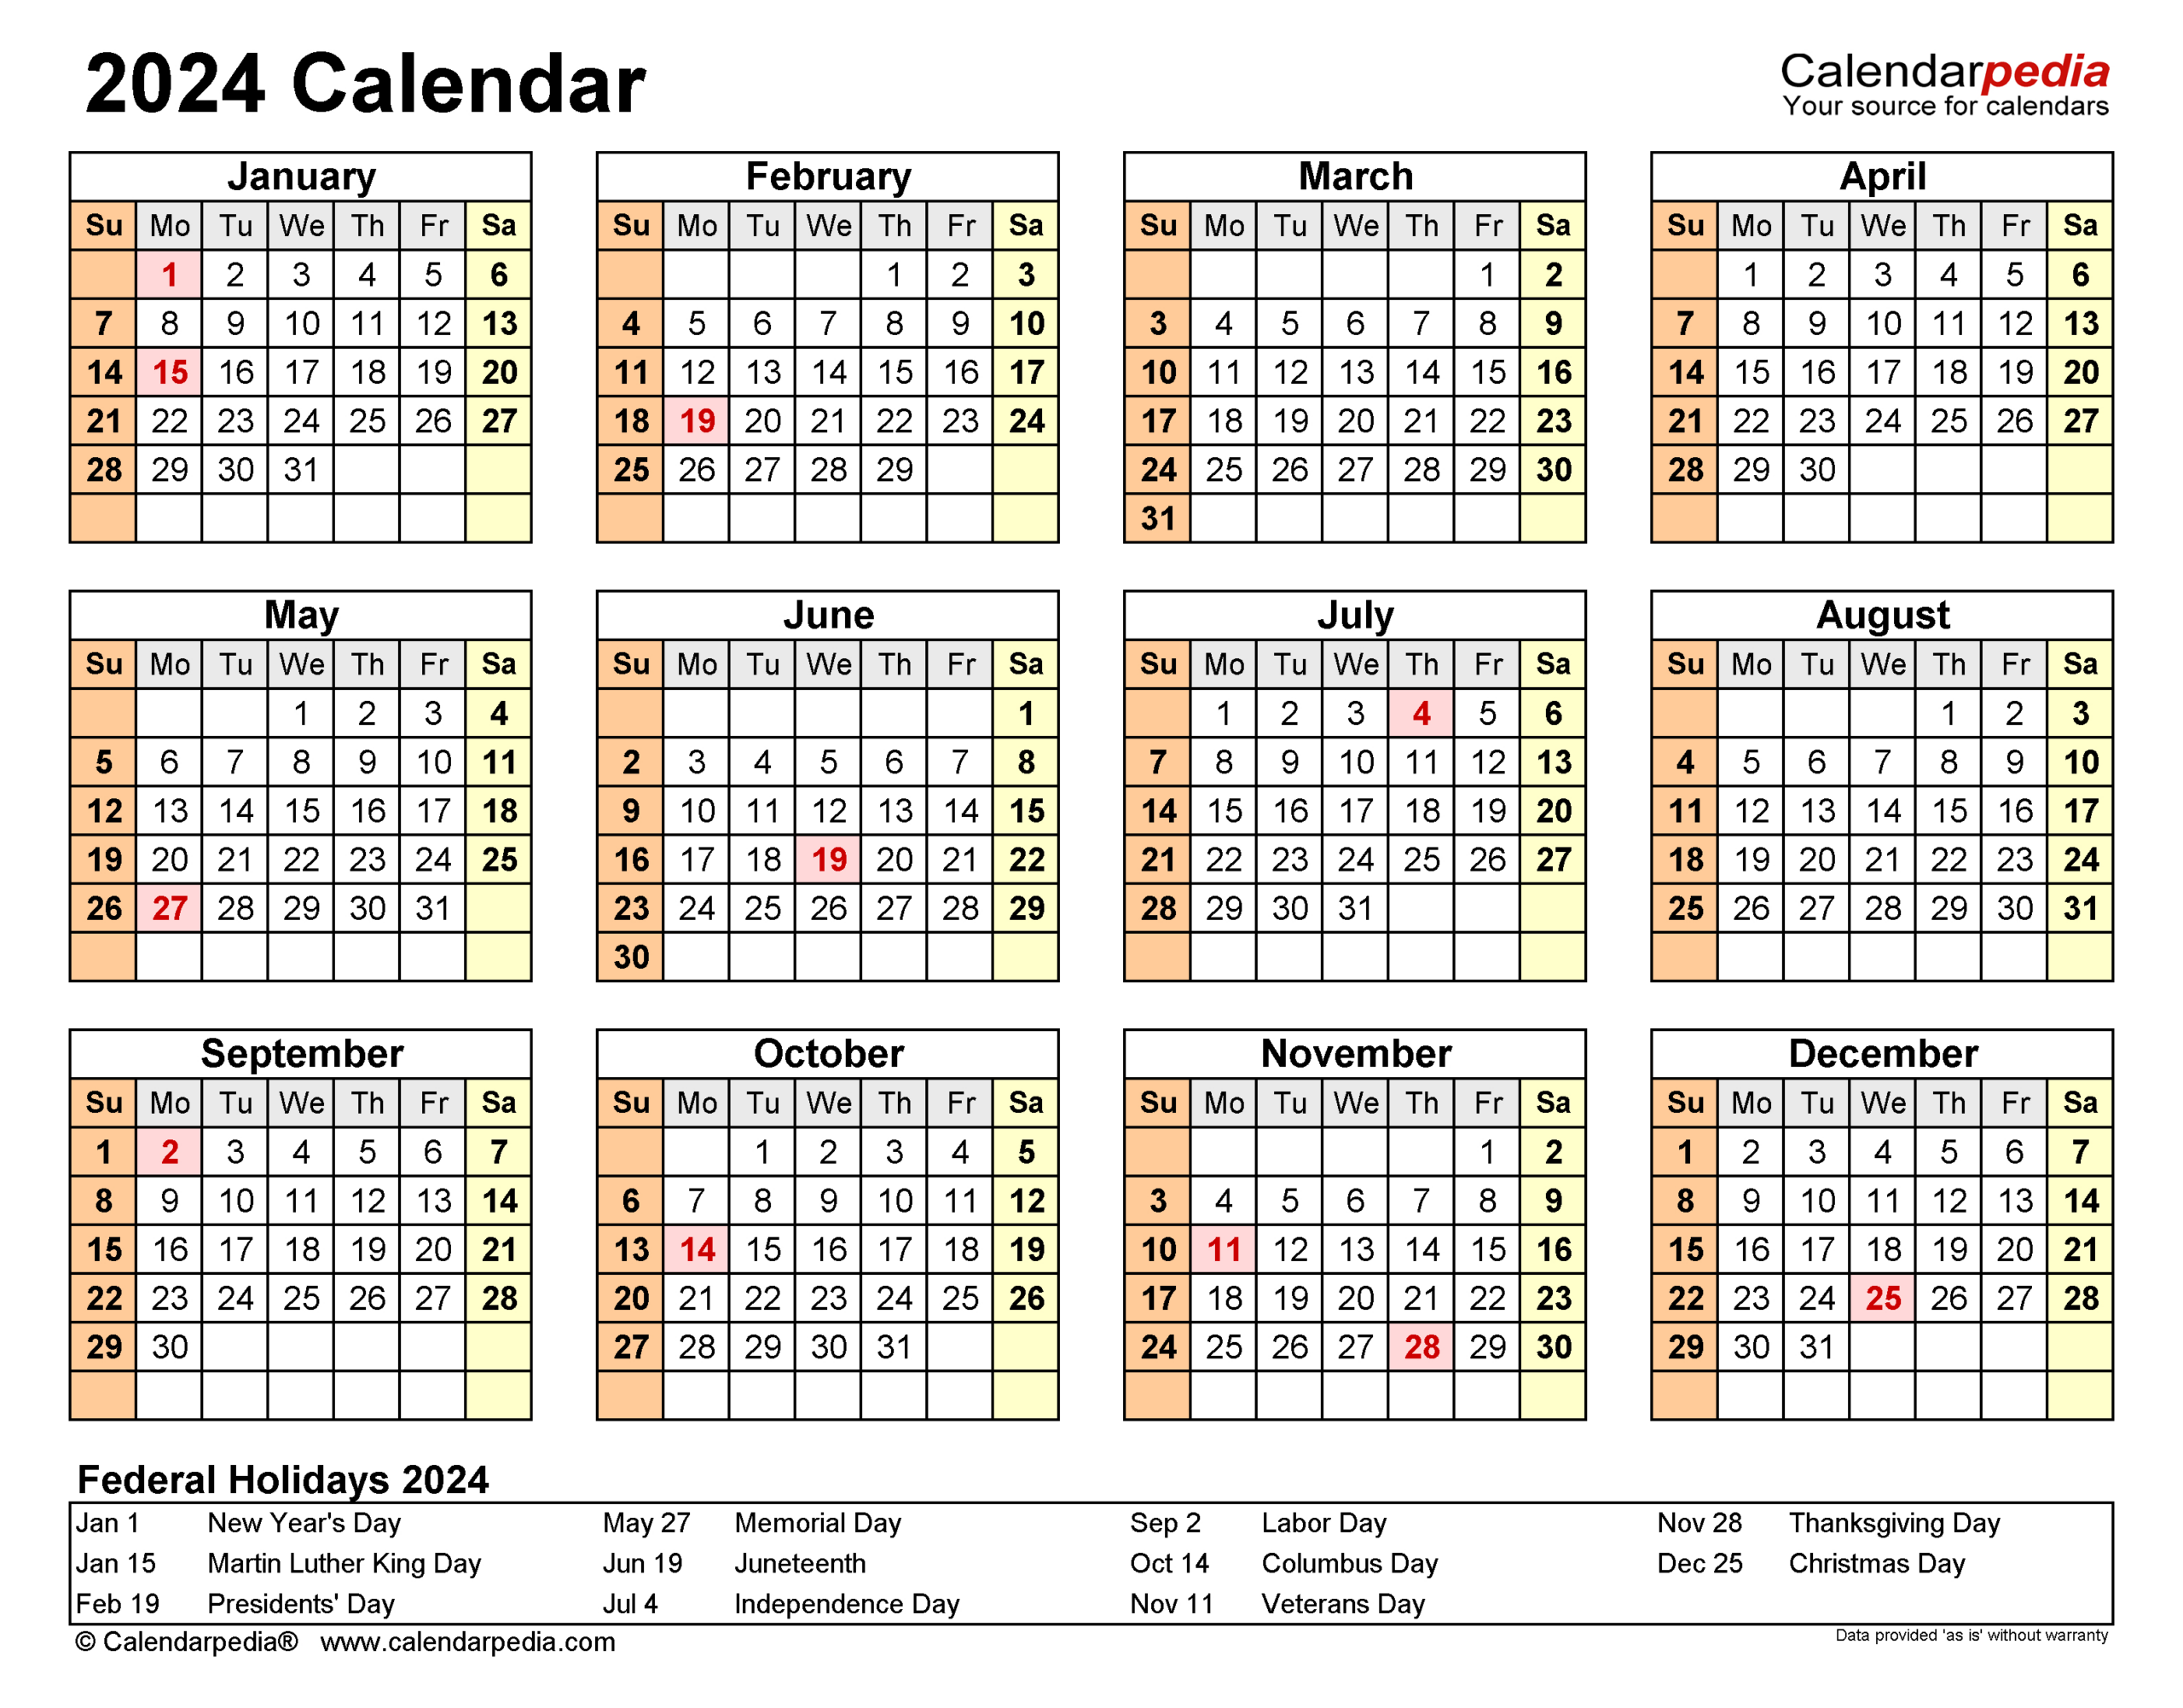 2024 Calendar - Free Printable Excel Templates - Calendarpedia | 2024 Yearly Calendar Excel